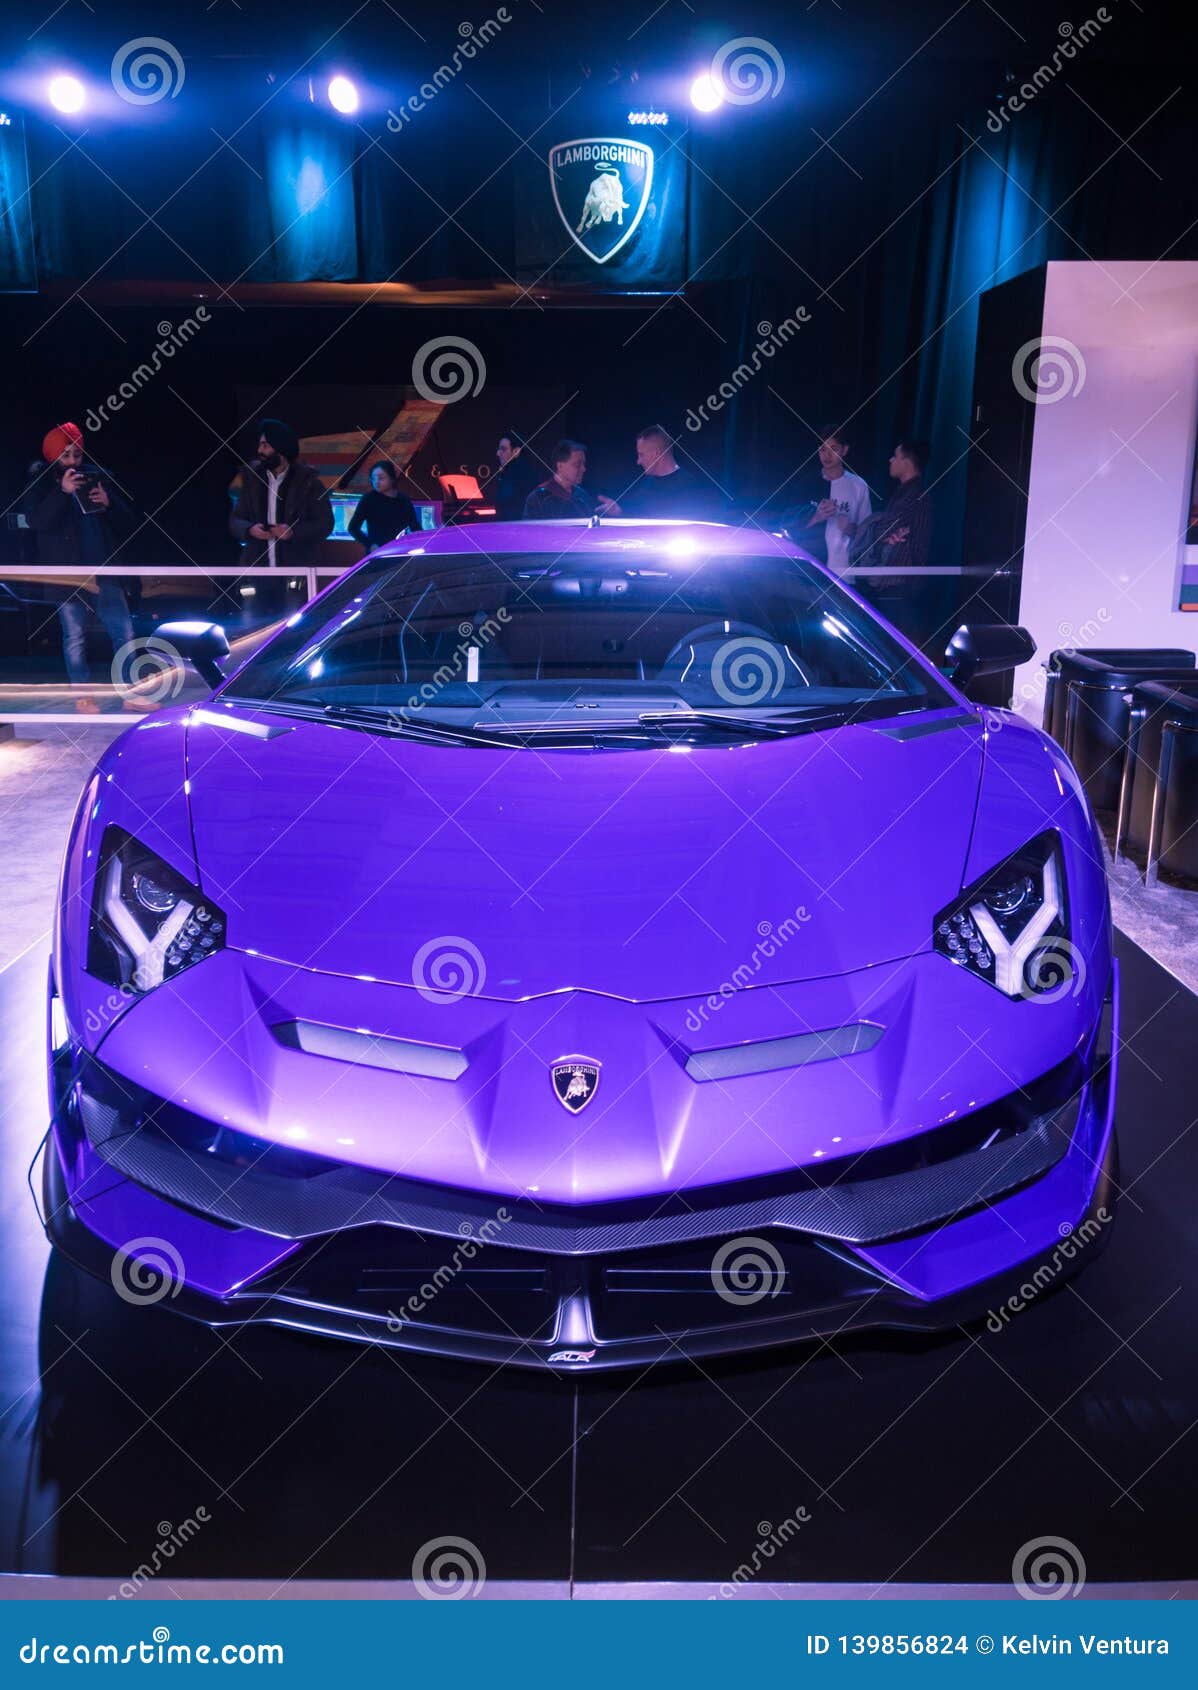 105 Purple Lamborghini Photos Free Royalty Free Stock Photos From Dreamstime